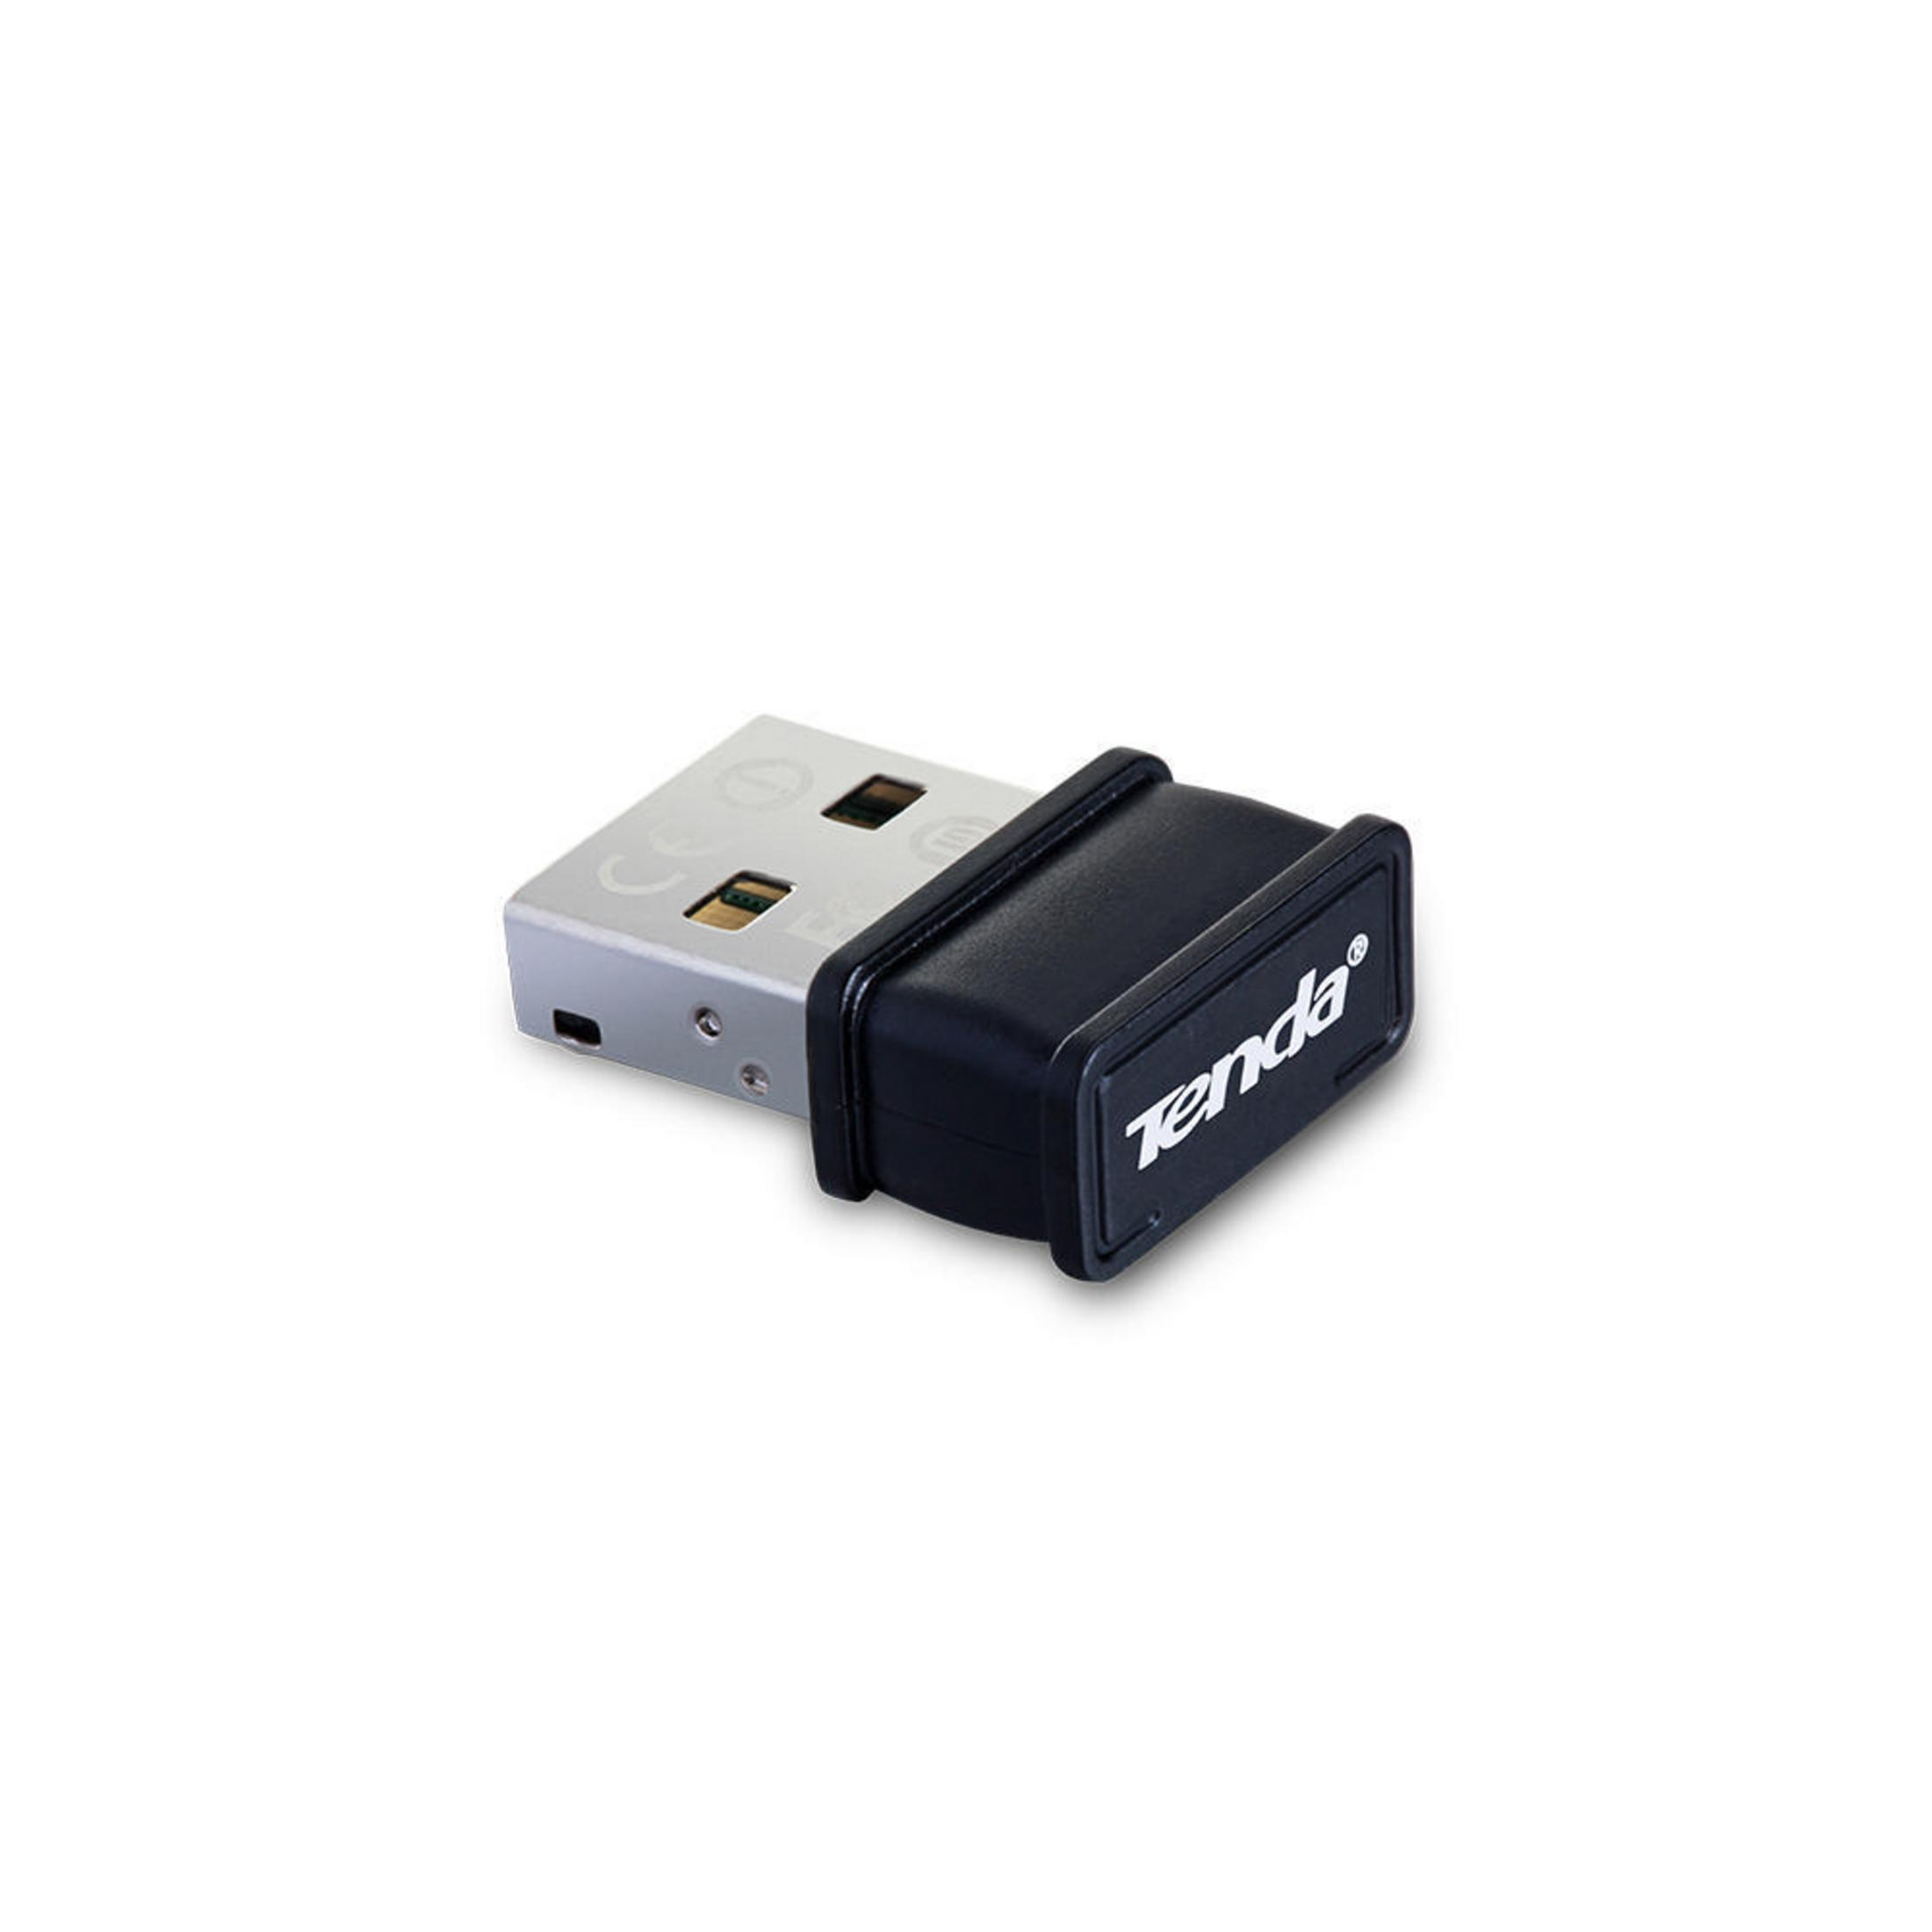 TENDA W311MI N150 WLAN-USB-Adapter WLAN-PICO-USB-ADAPTER